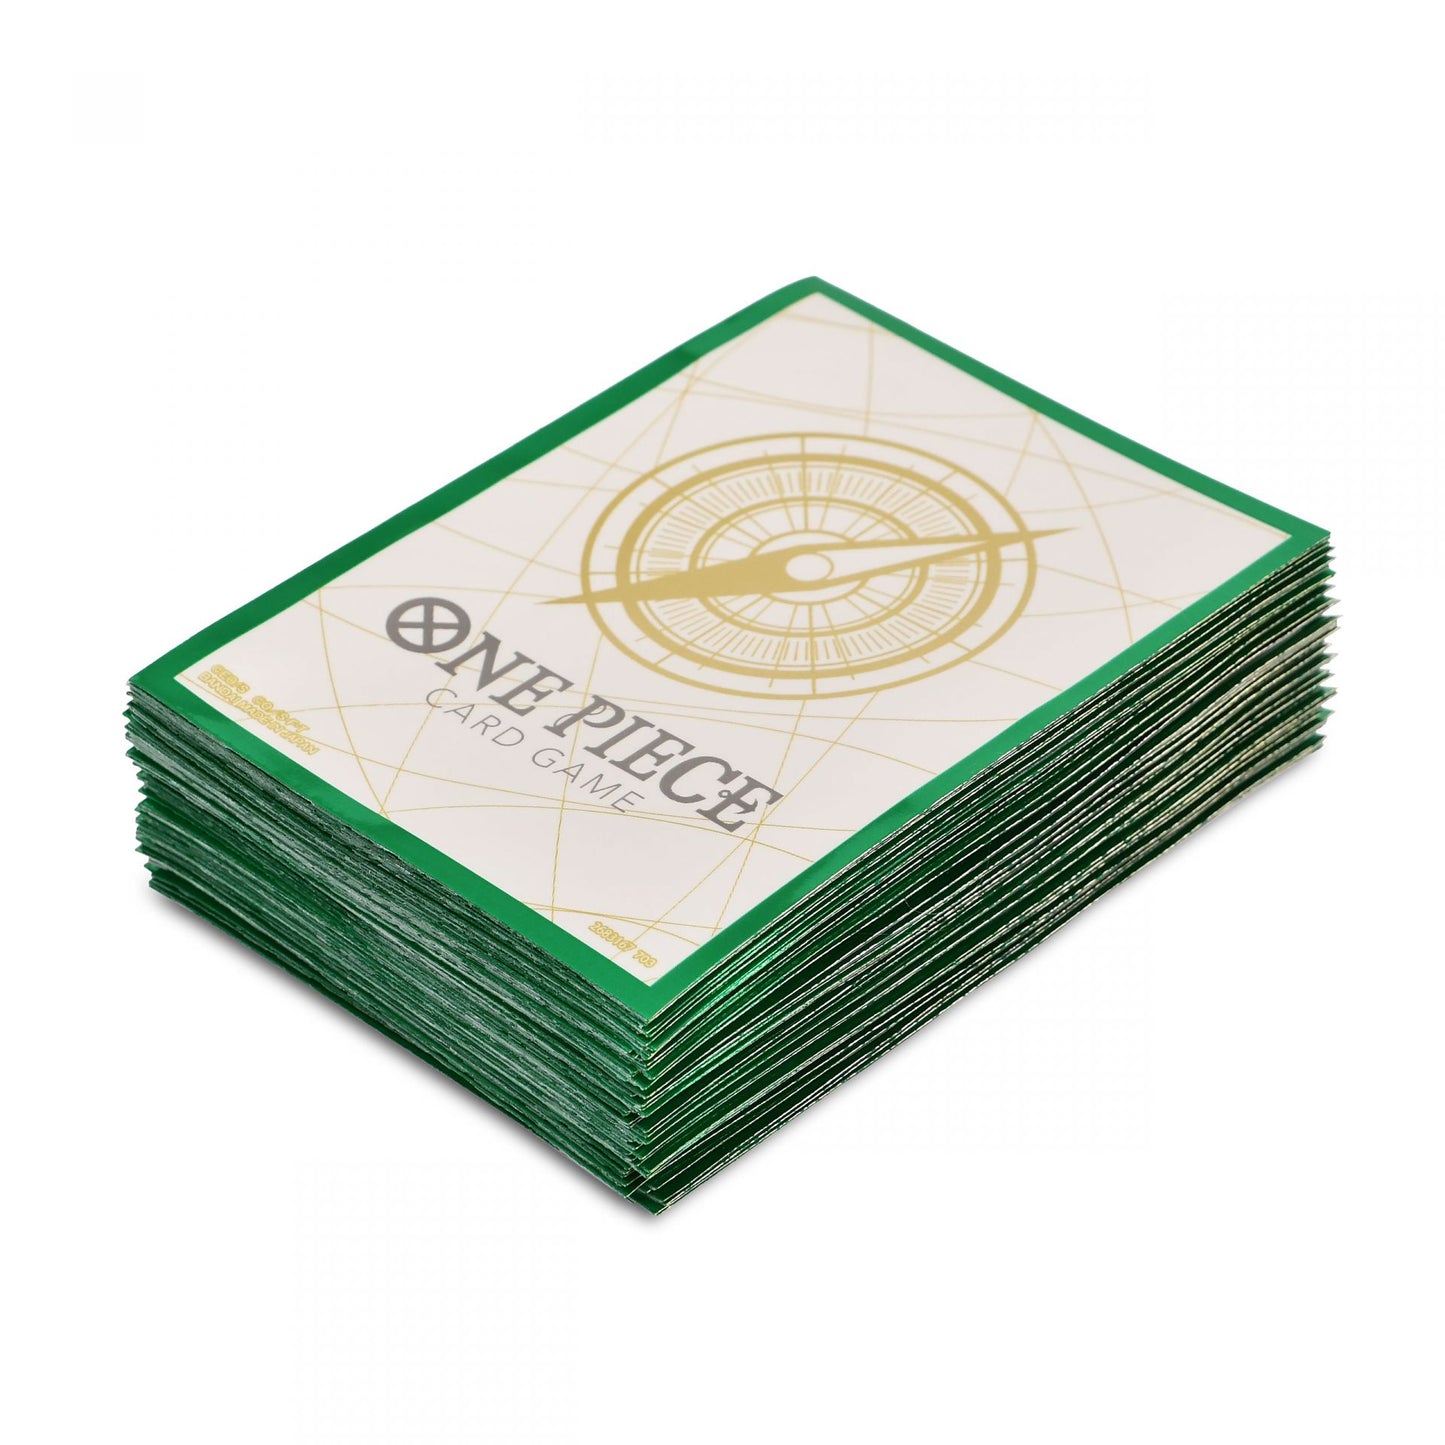 70 Protèges-cartes / Sleeves  - Standard Green